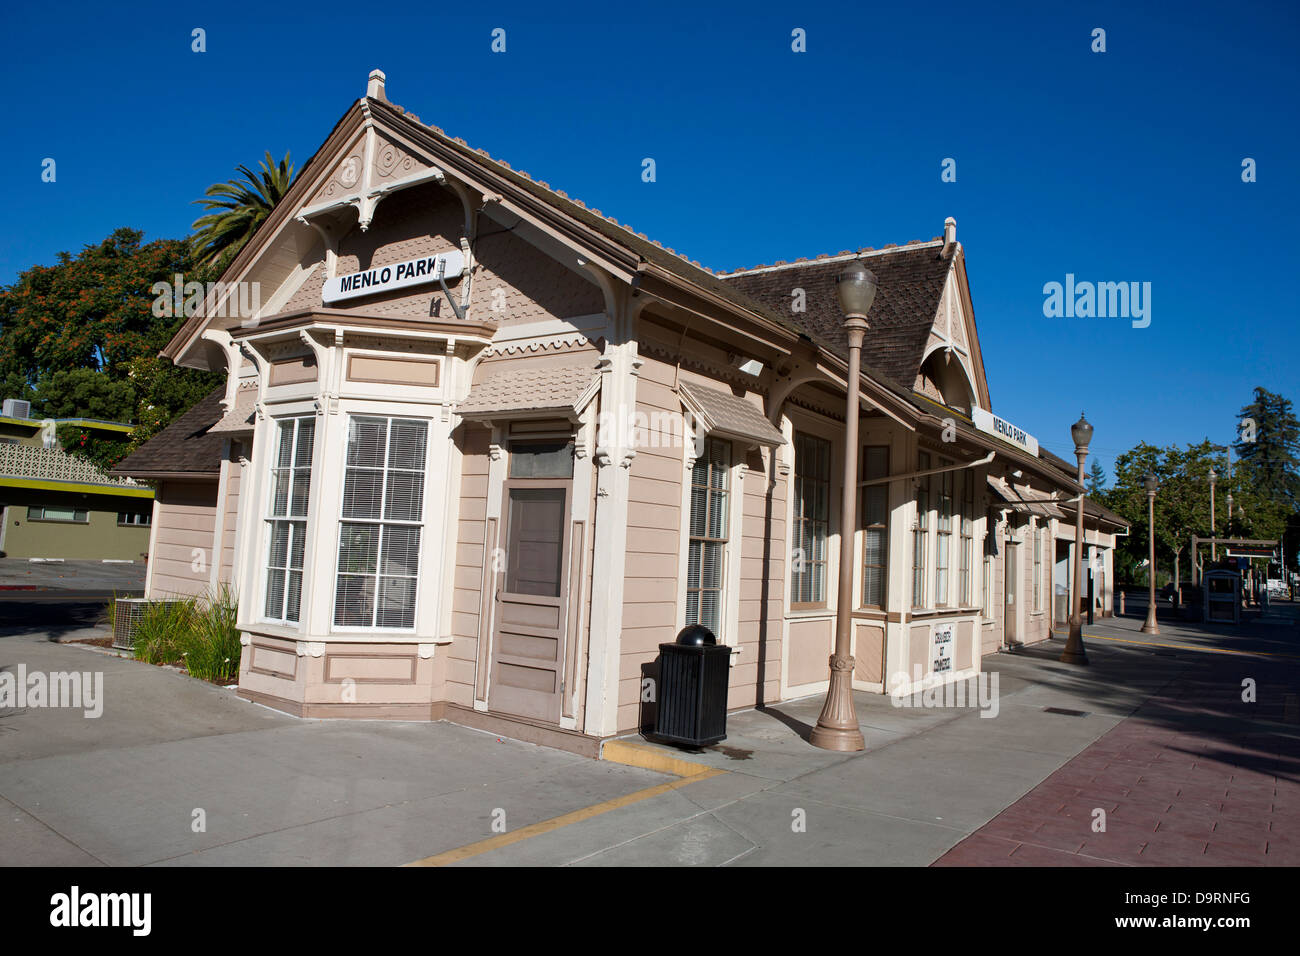 Menlo Park Railroad Station, oldest passenger train station in California, Menlo Park, California, United States of America Stock Photo